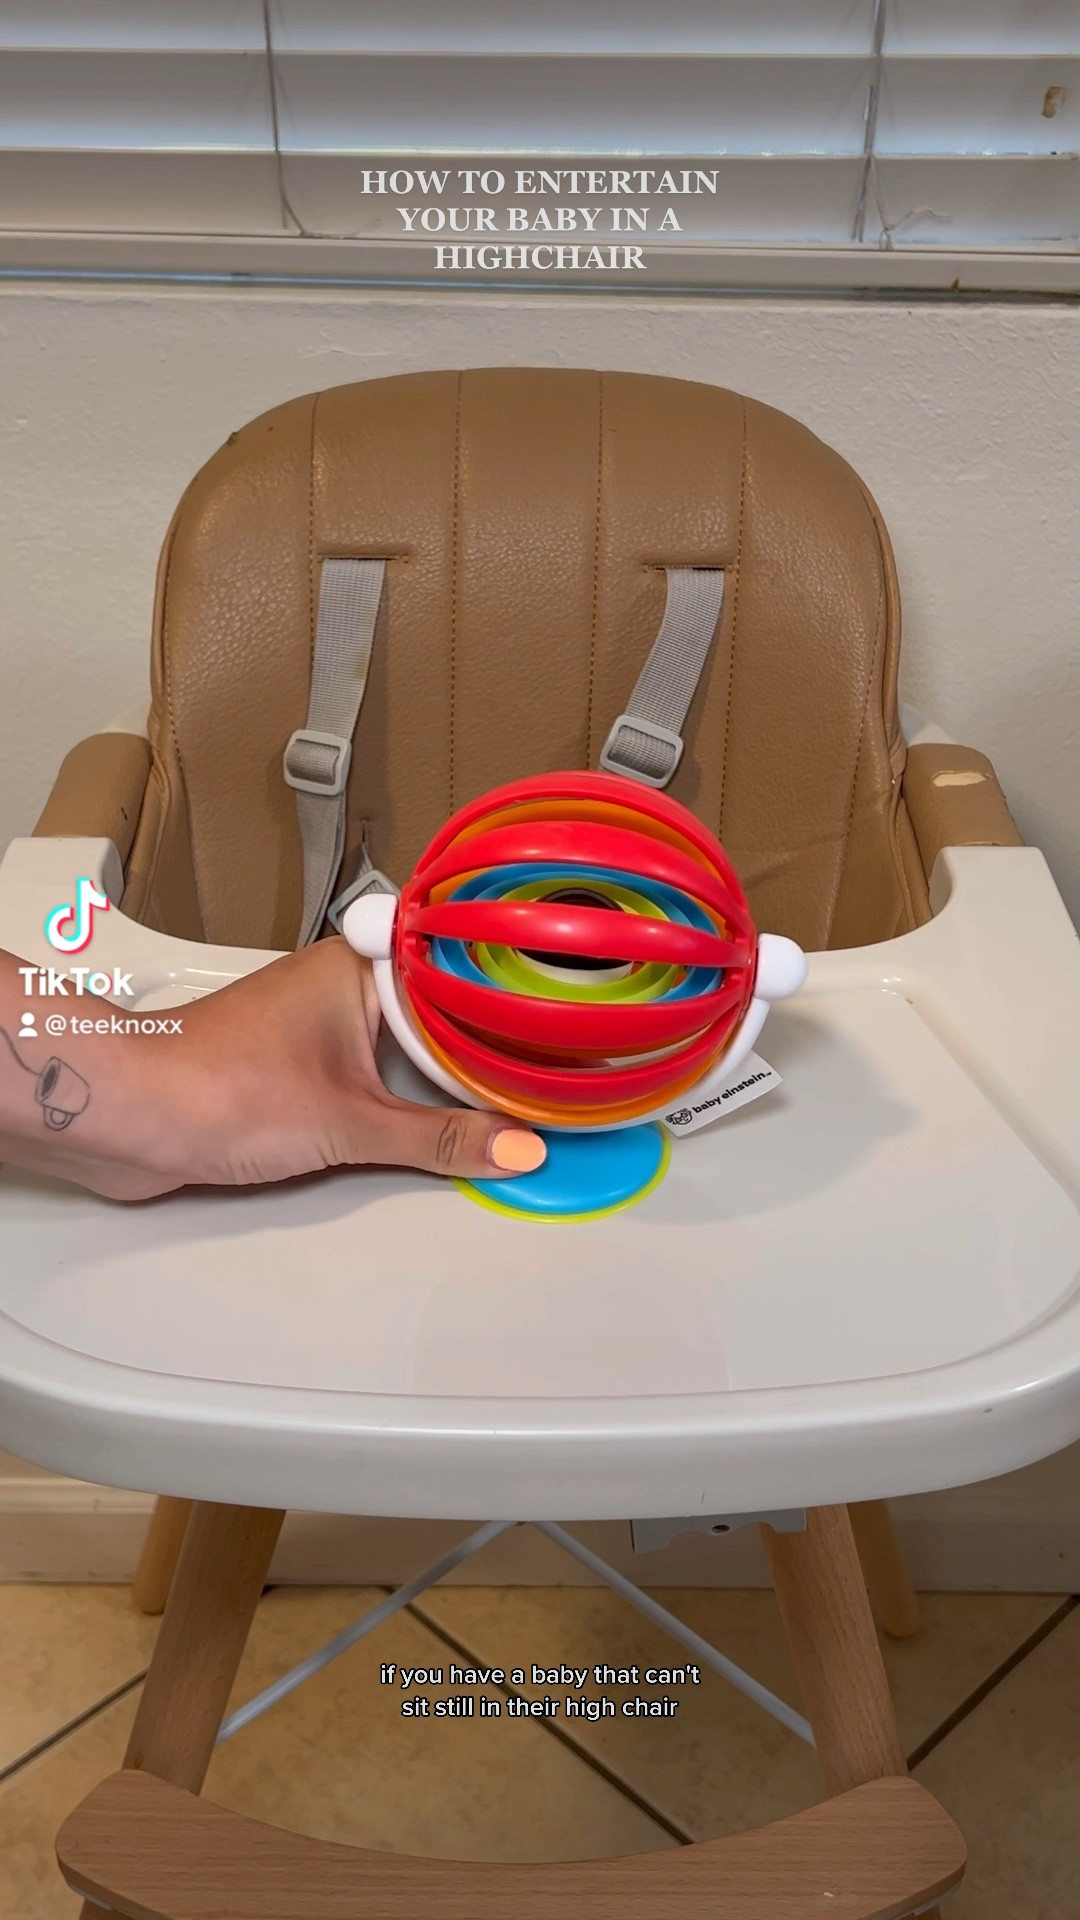 Baby Einstein Sticky Spinner BPA-free High Chair Activity Toy, Ages 3  Months+